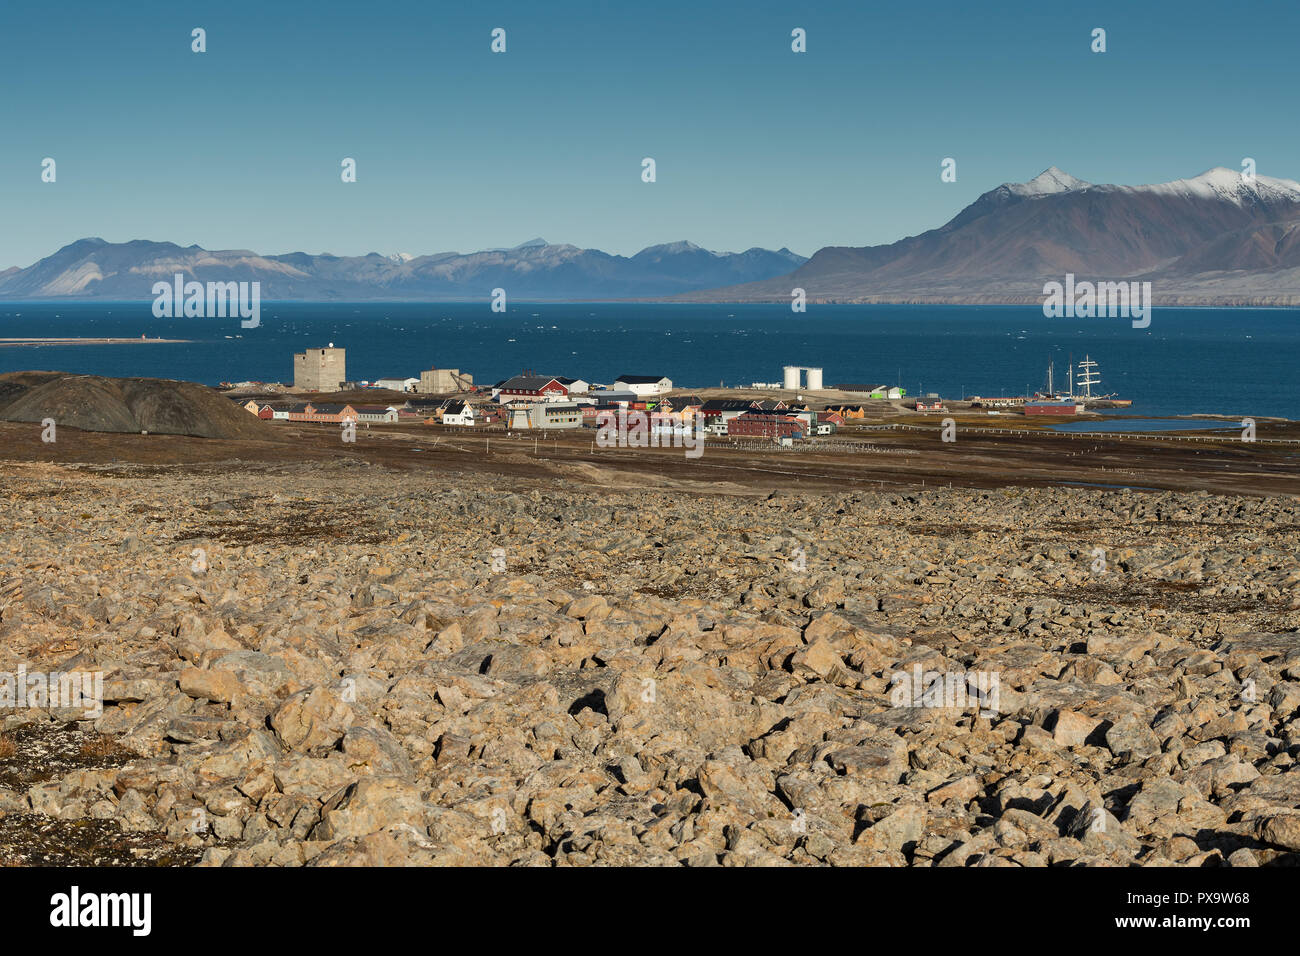 La ricerca di insediamento a Ny Ålesund, Kongsfjorden, isola Spitsbergen, Spitsbergen arcipelago Svalbard e Jan Mayen, Norvegia Foto Stock